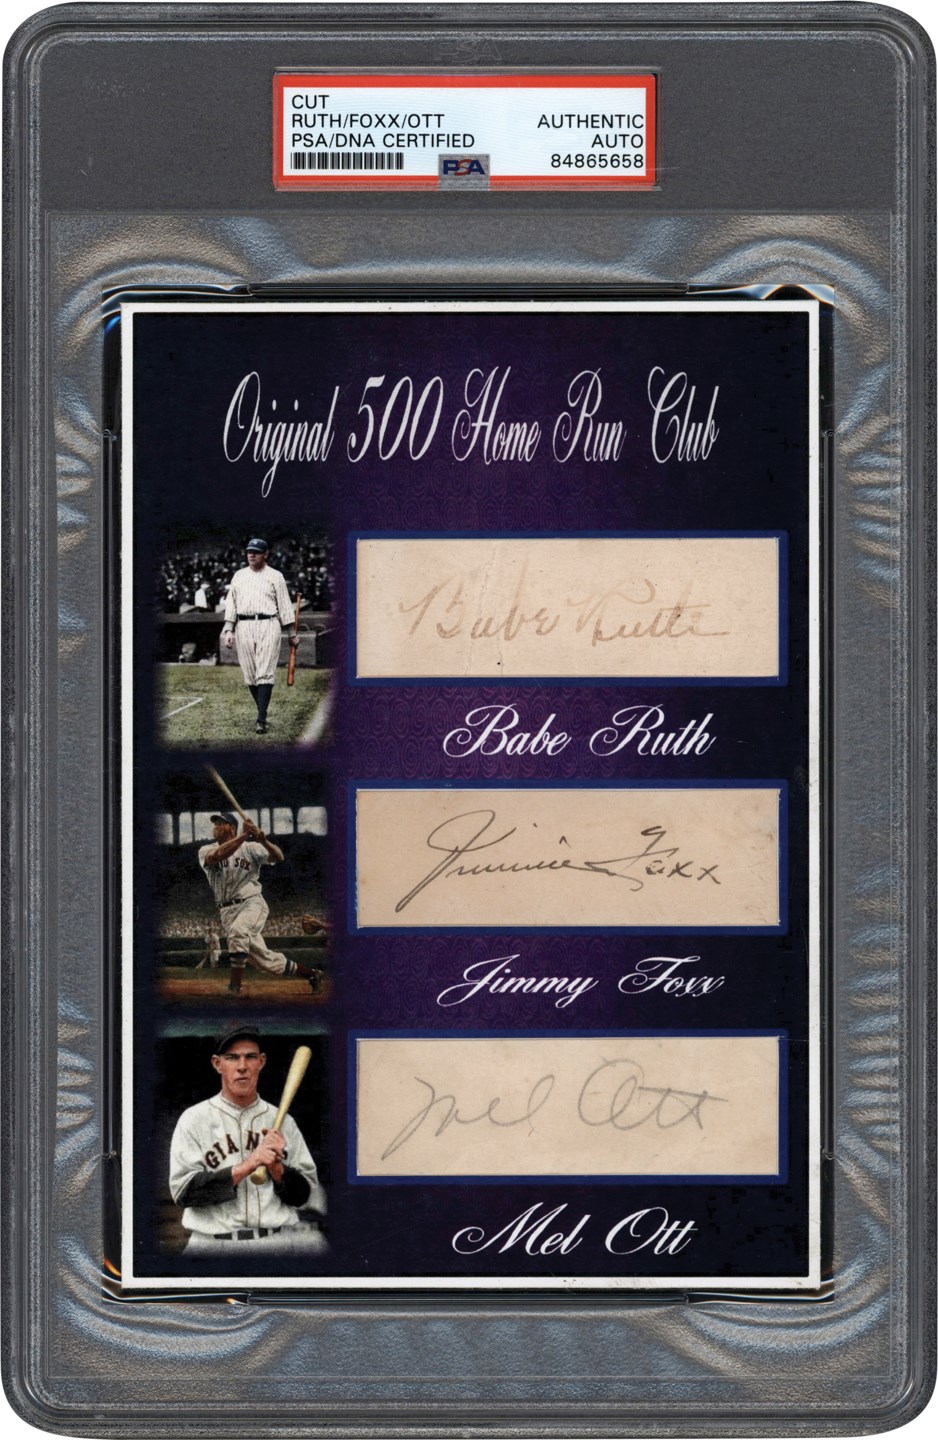 - Original 500 Home Run Club Signed Card of Babe Ruth, Jimmie Foxx, and Mel Ott (PSA)